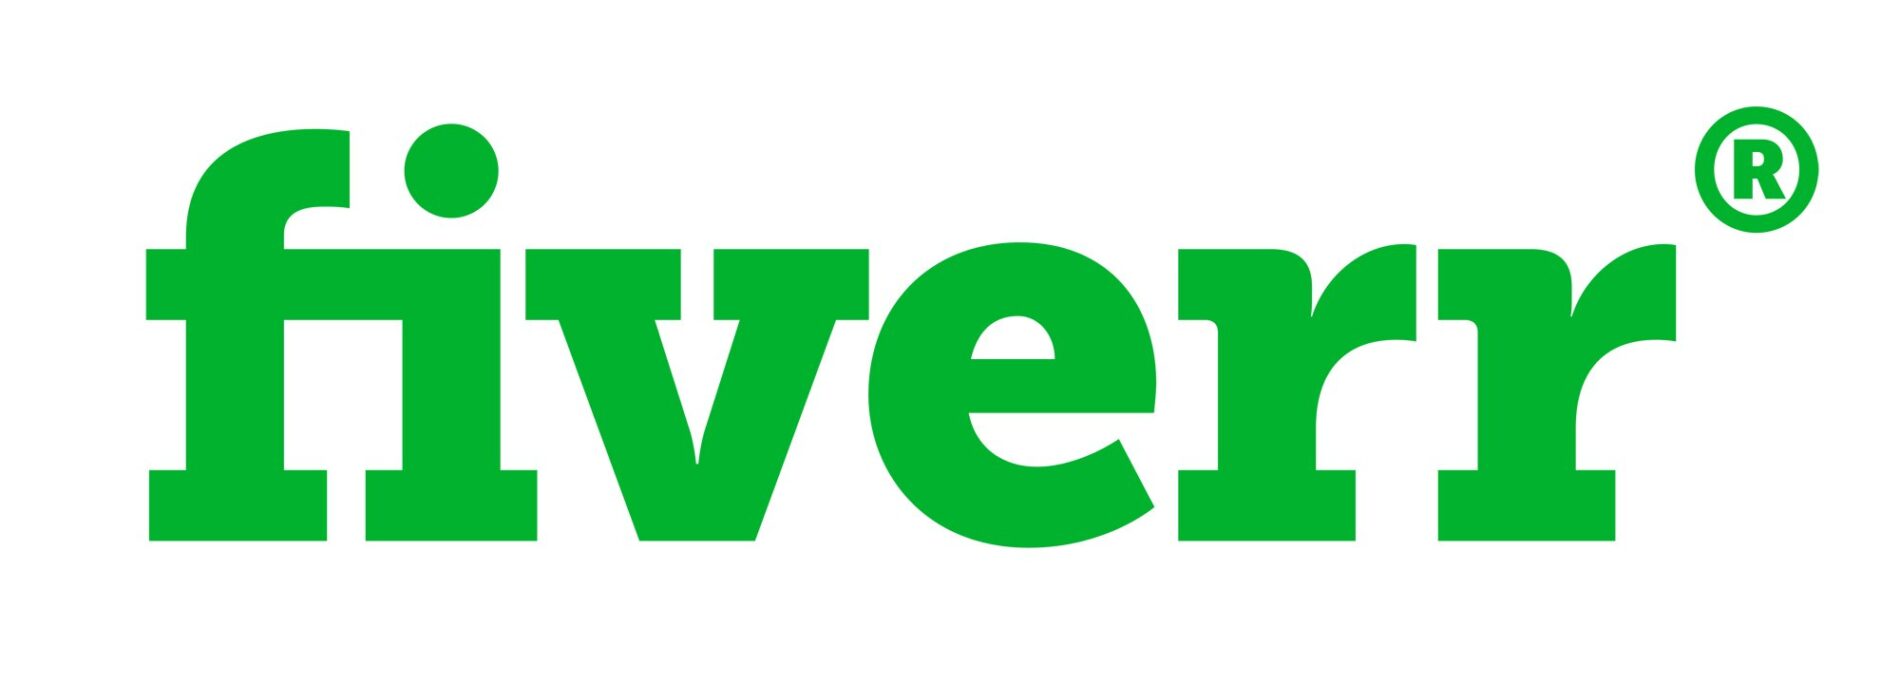 Fiverr Logo for berber market idea